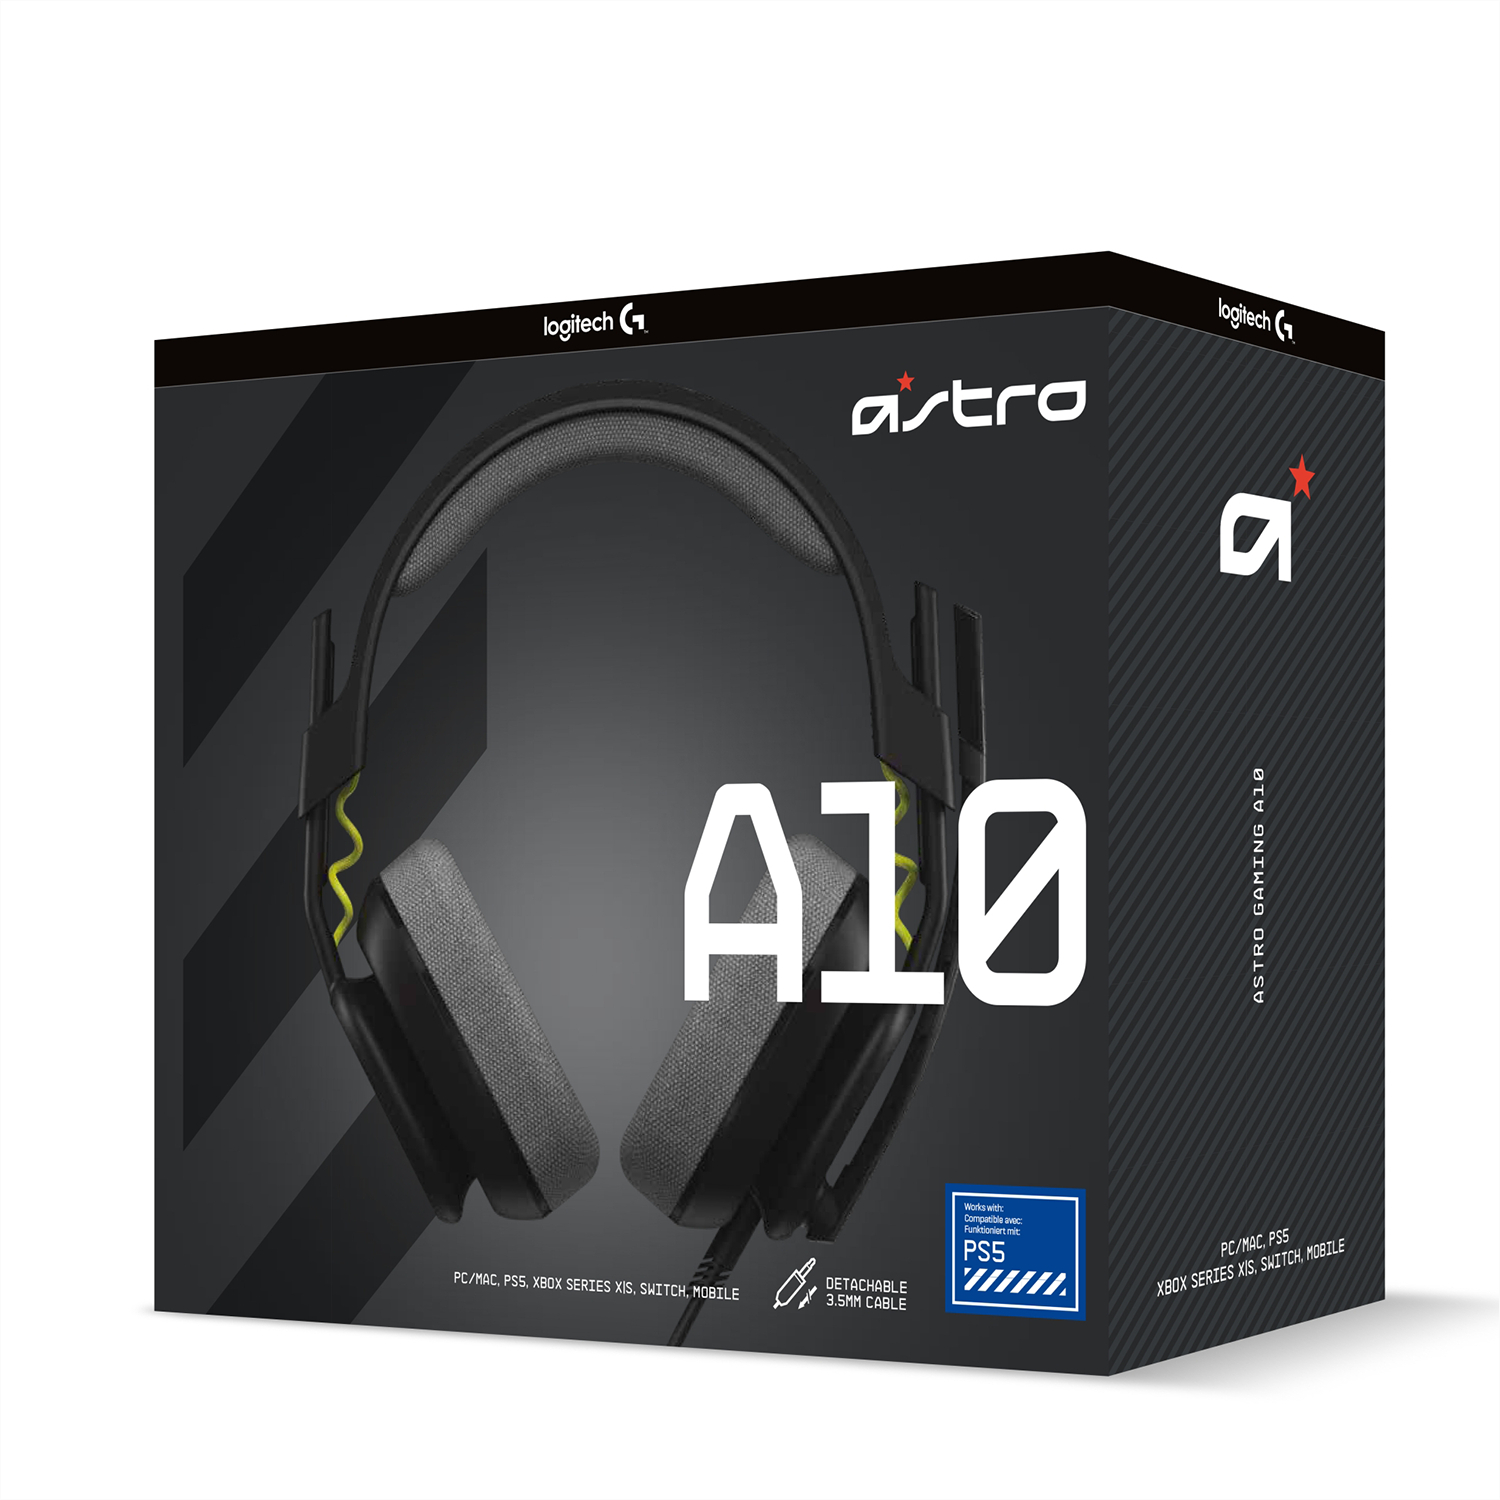 ASTRO GAMING A10 Gen 2, Gaming Schwarz Over-ear Headset